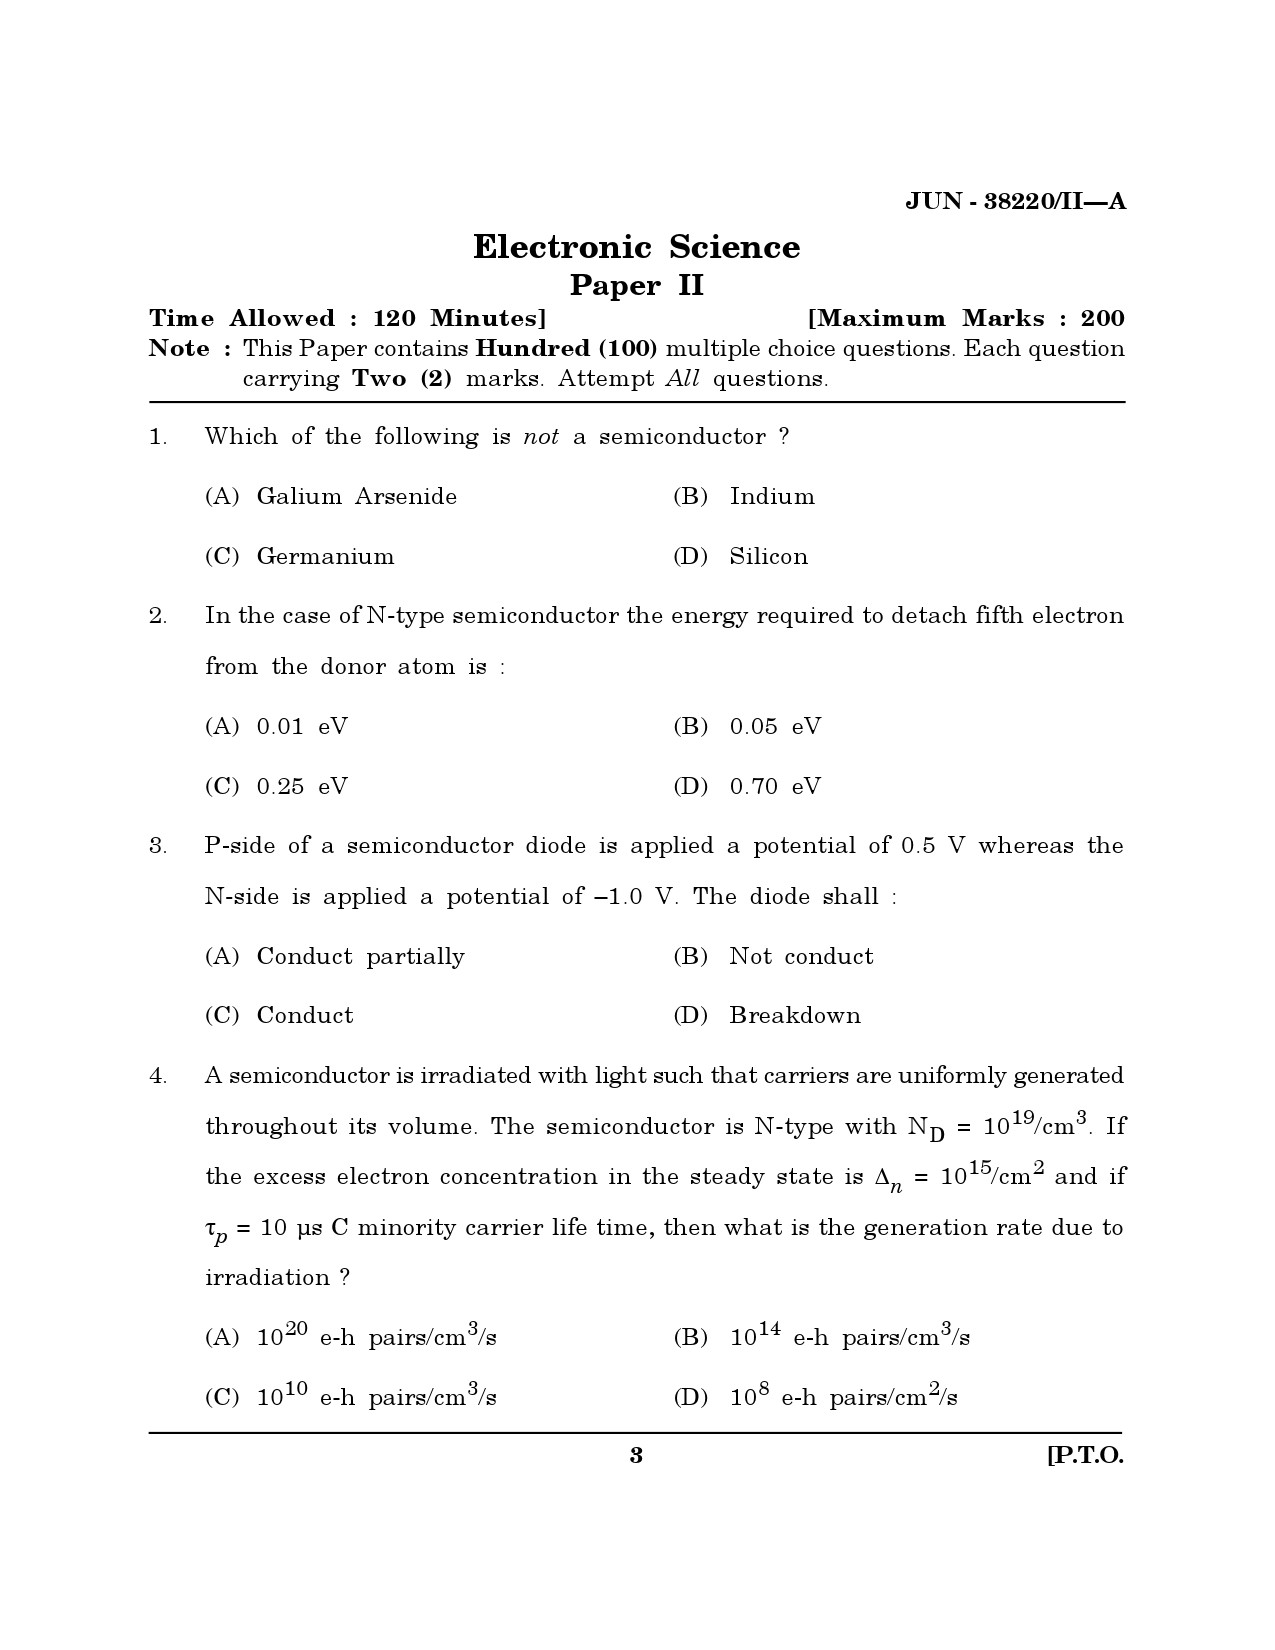 Maharashtra SET Electronics Science Question Paper II June 2020 2